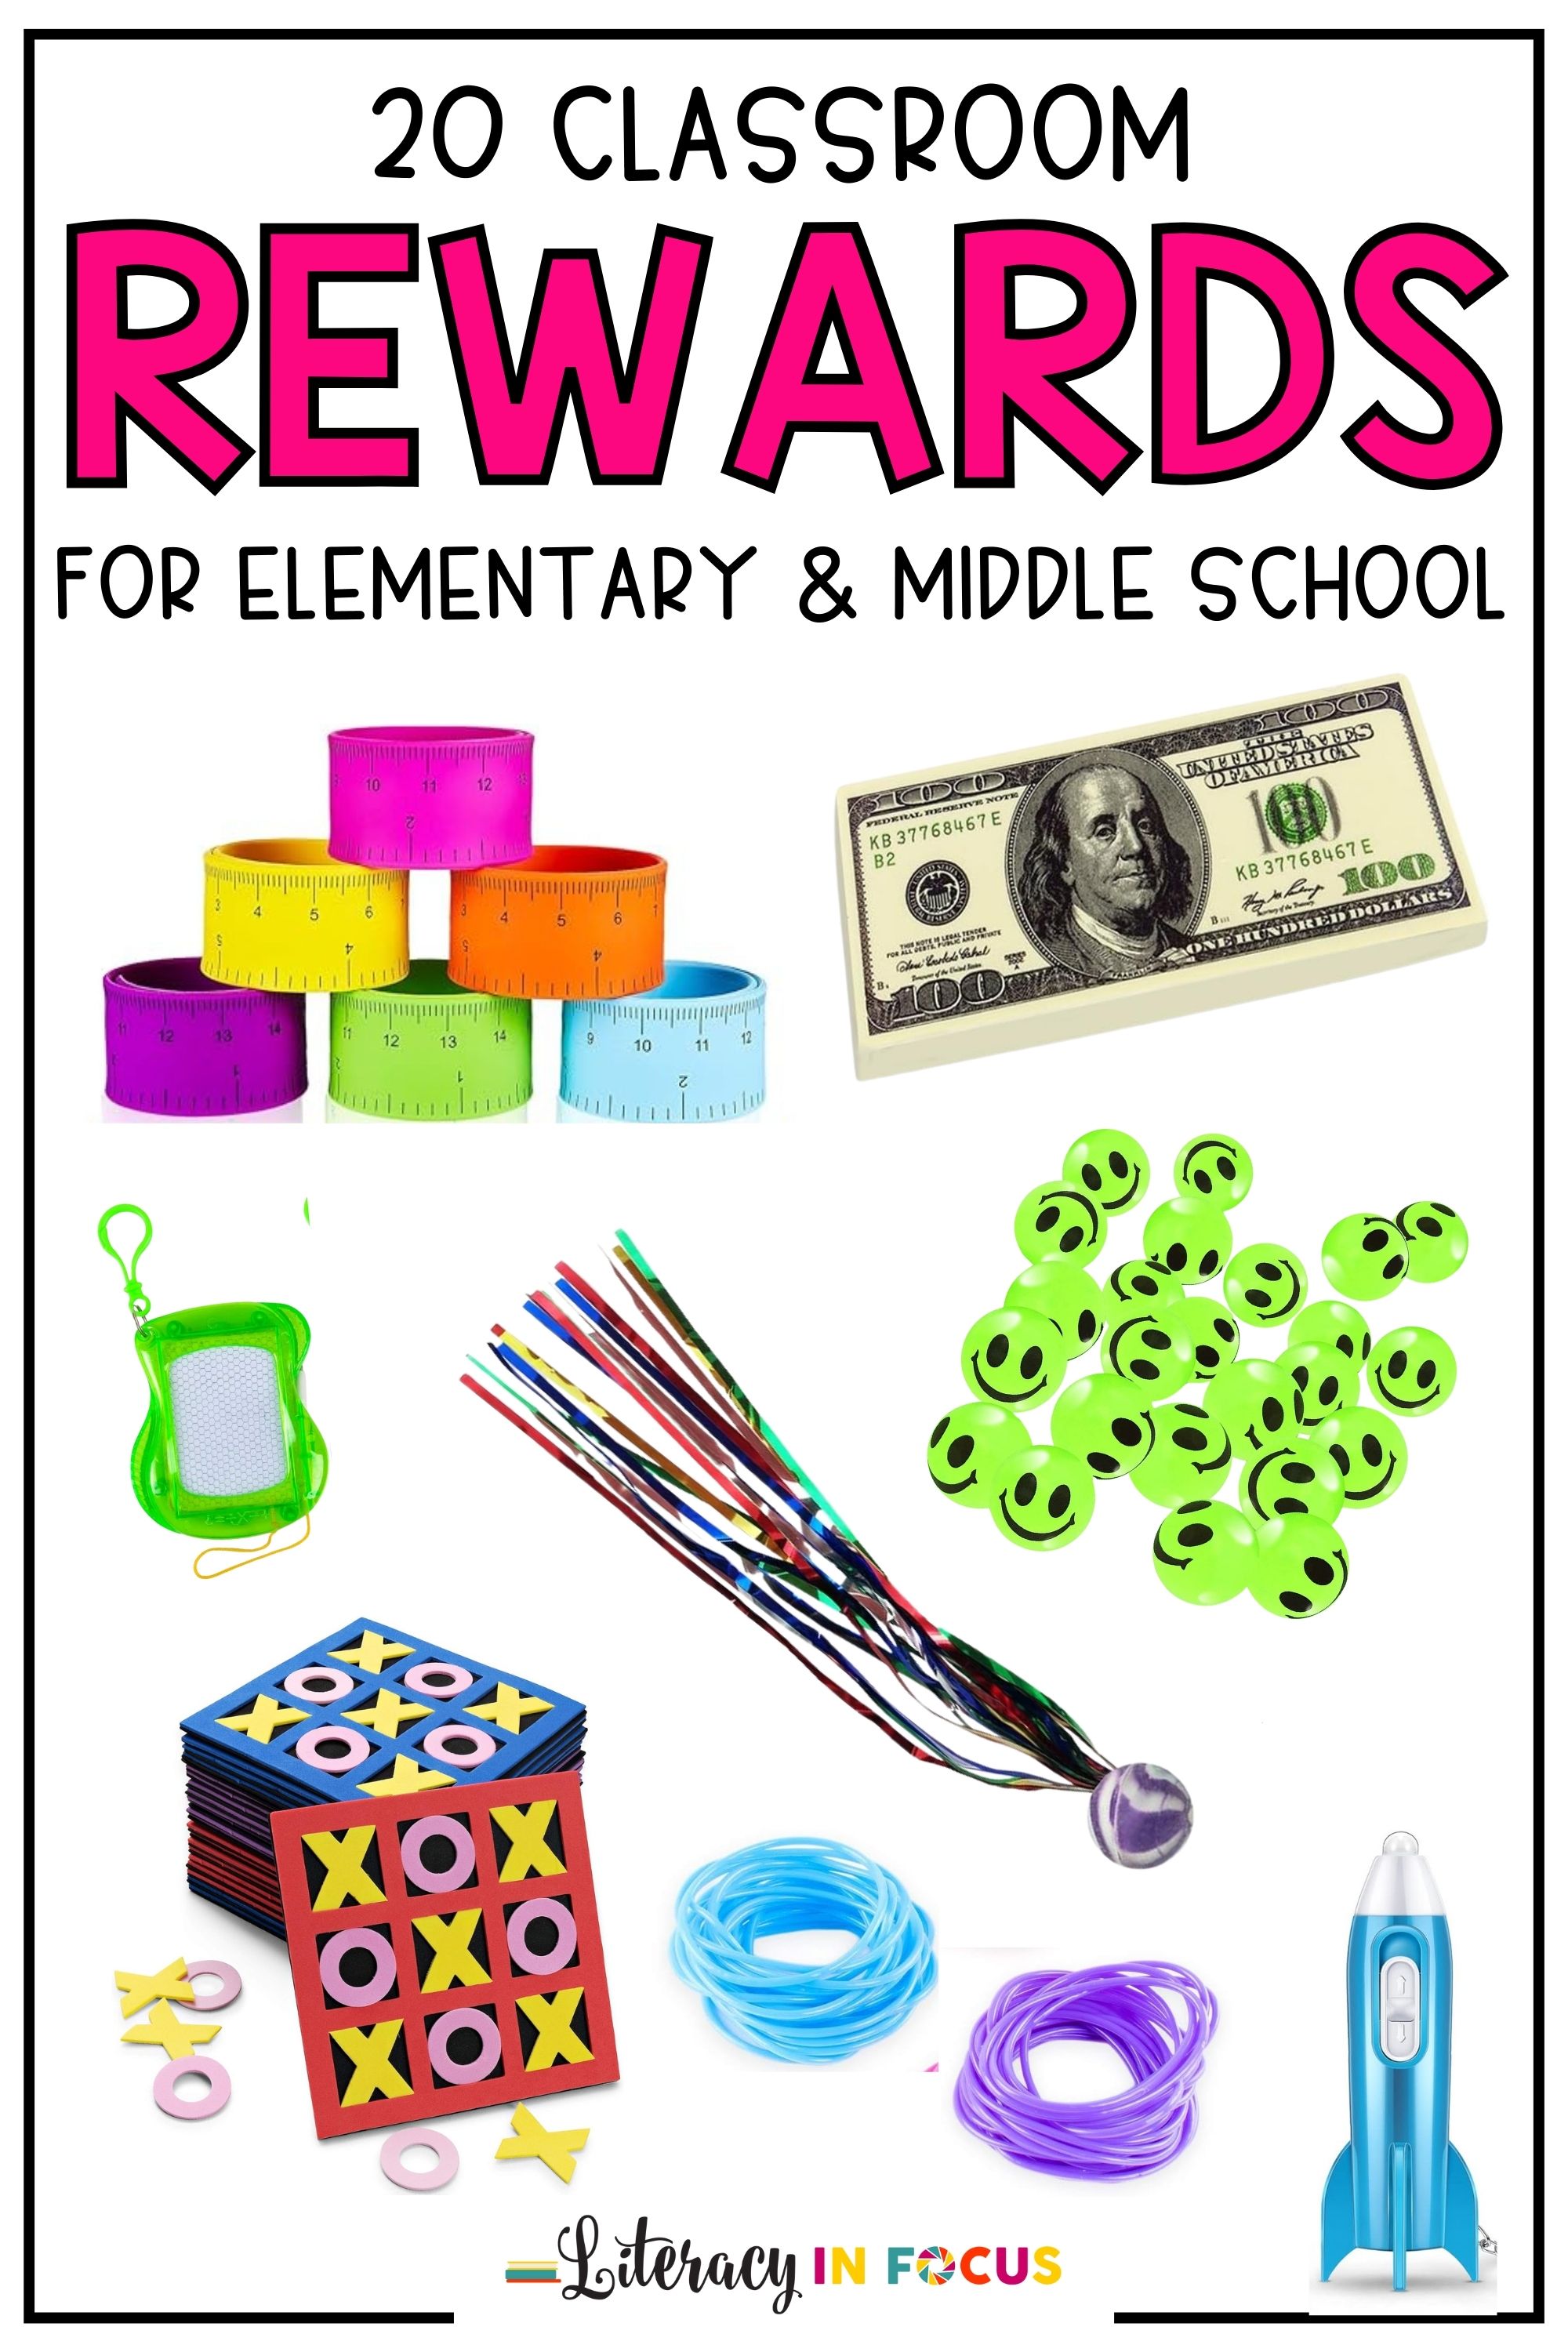 Classroom Reward Ideas for Elementary & Middle School Students